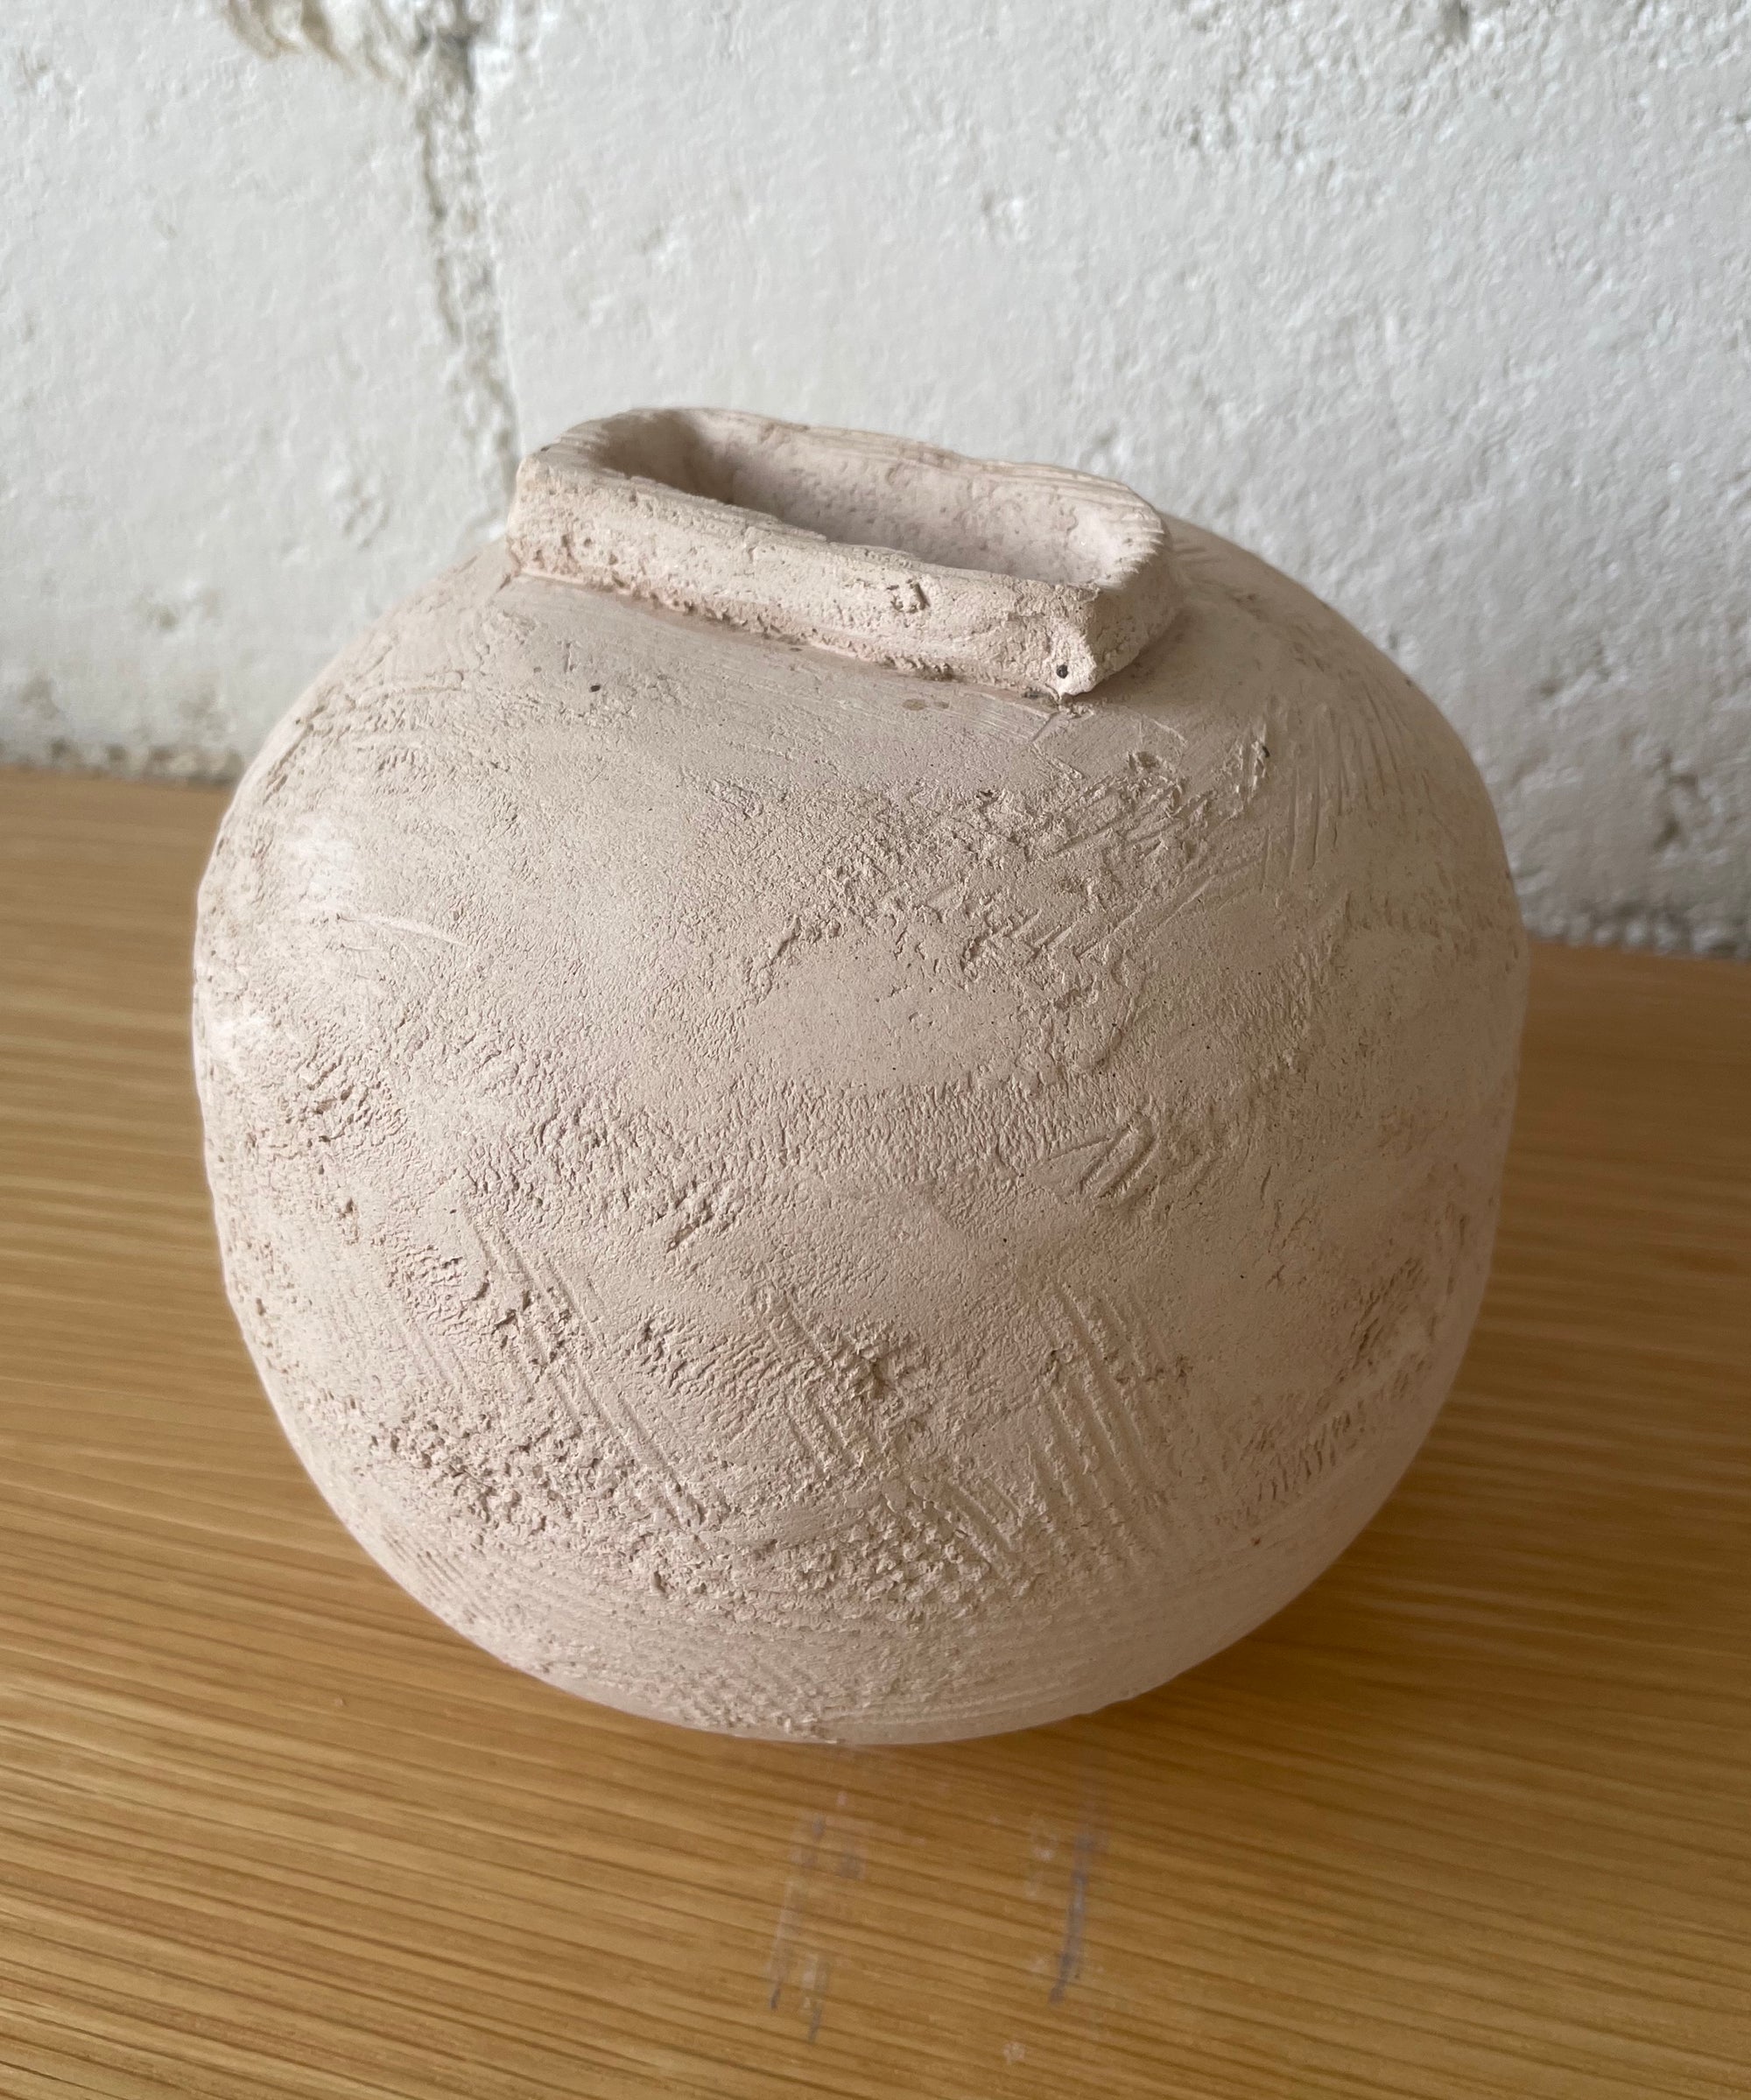 Handmade Ceramic Collections "Box"